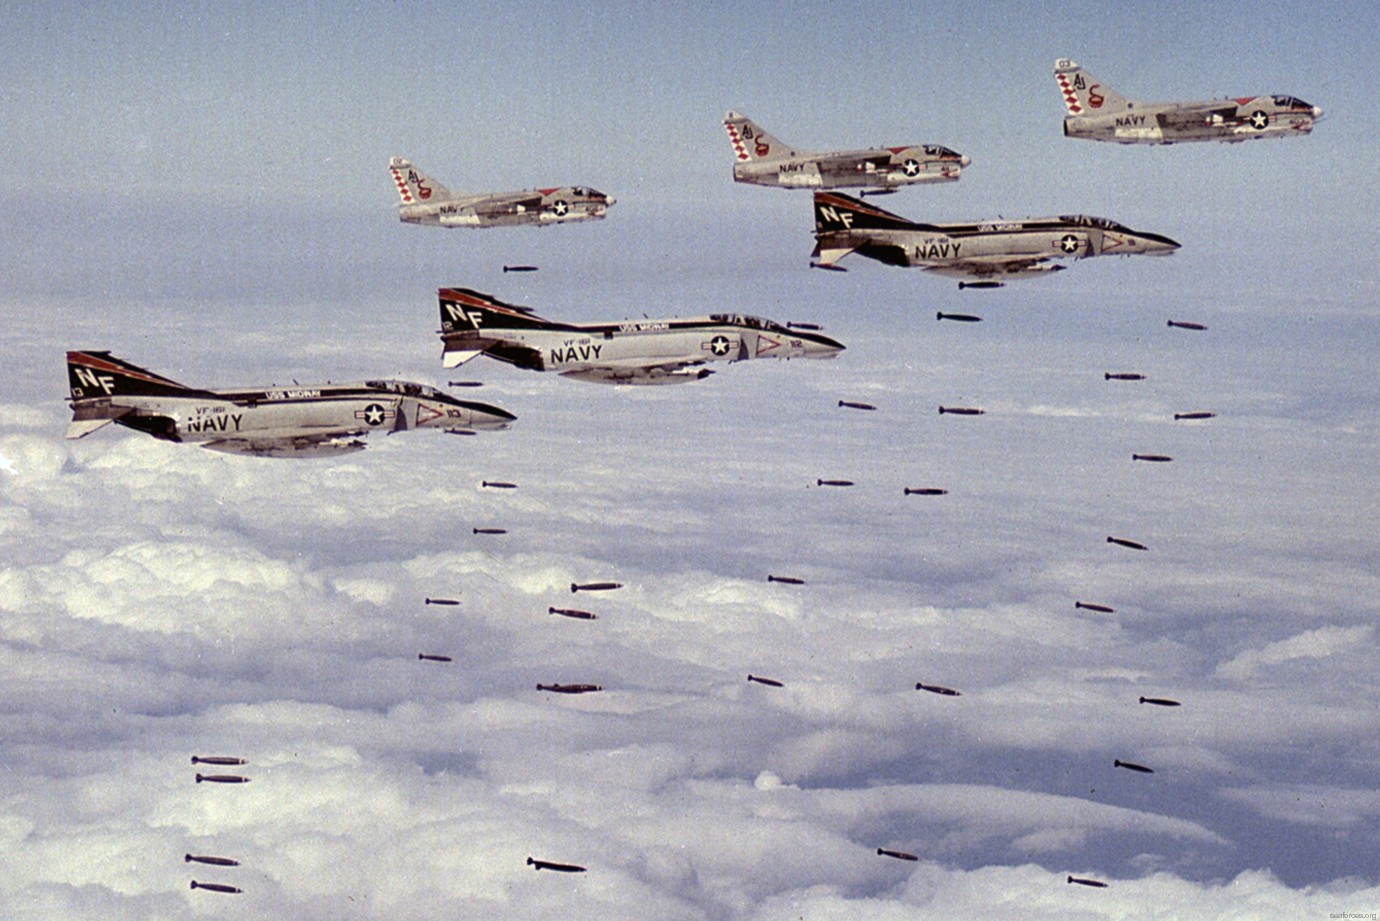 vf-161 chargers fighter squadron navy f-4b phantom ii carrier air wing cvw-5 uss midway cv-41 11 vietnam war bombing